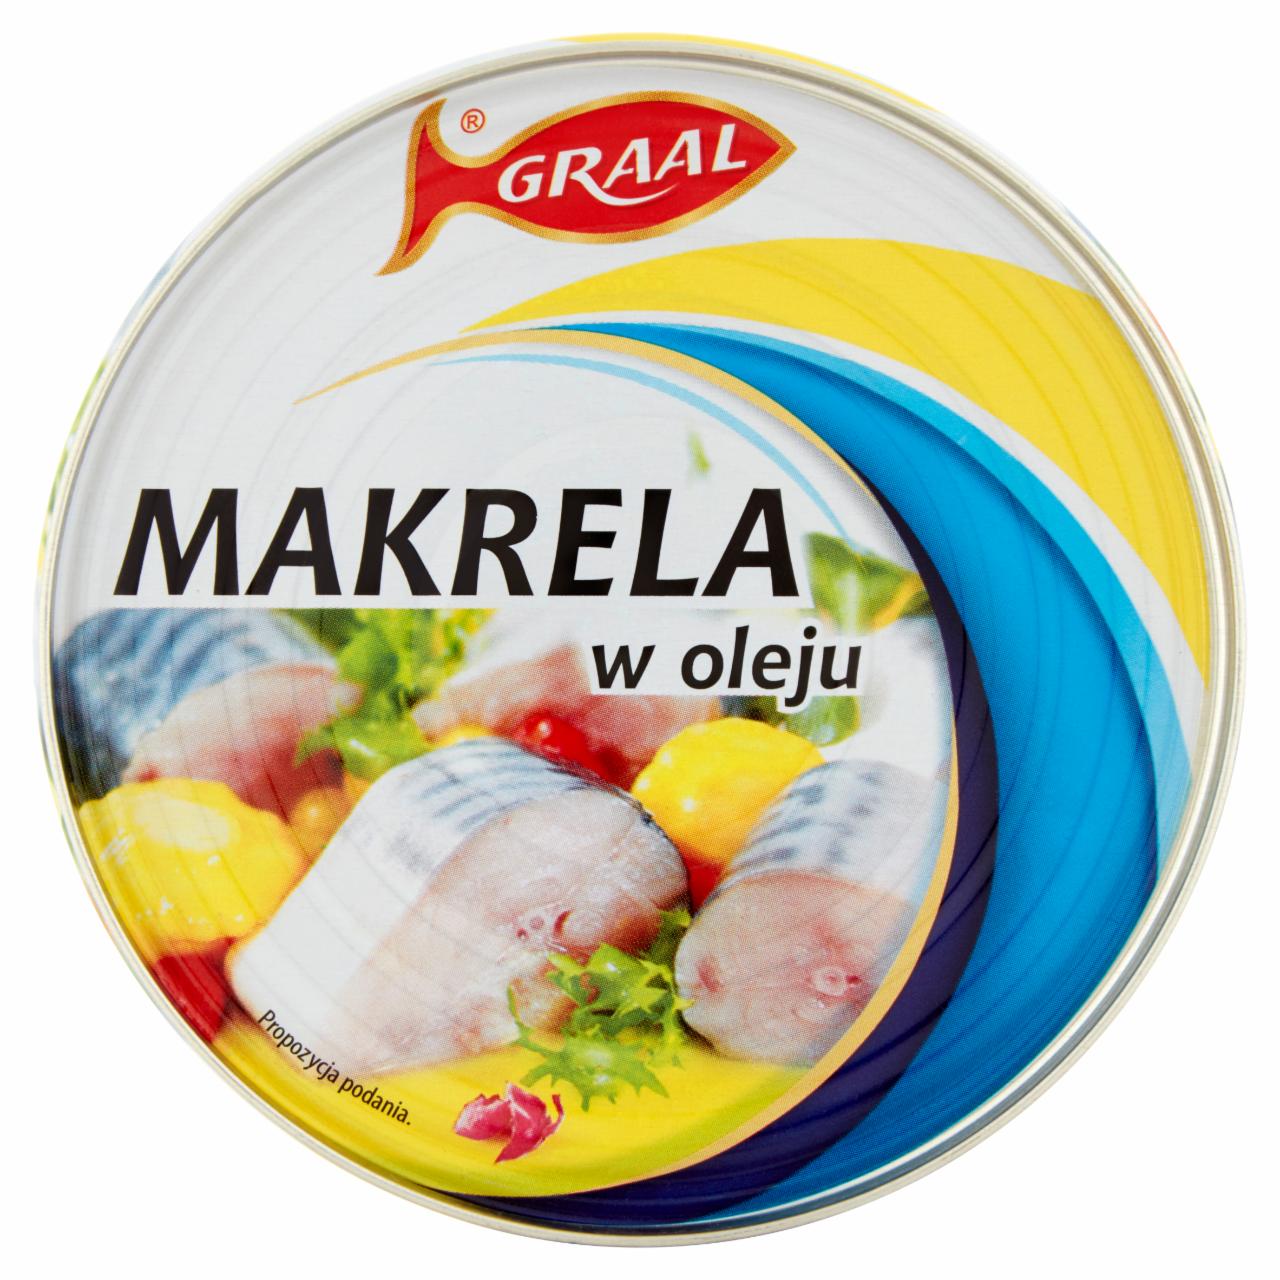 Zdjęcia - GRAAL Makrela w oleju 300 g